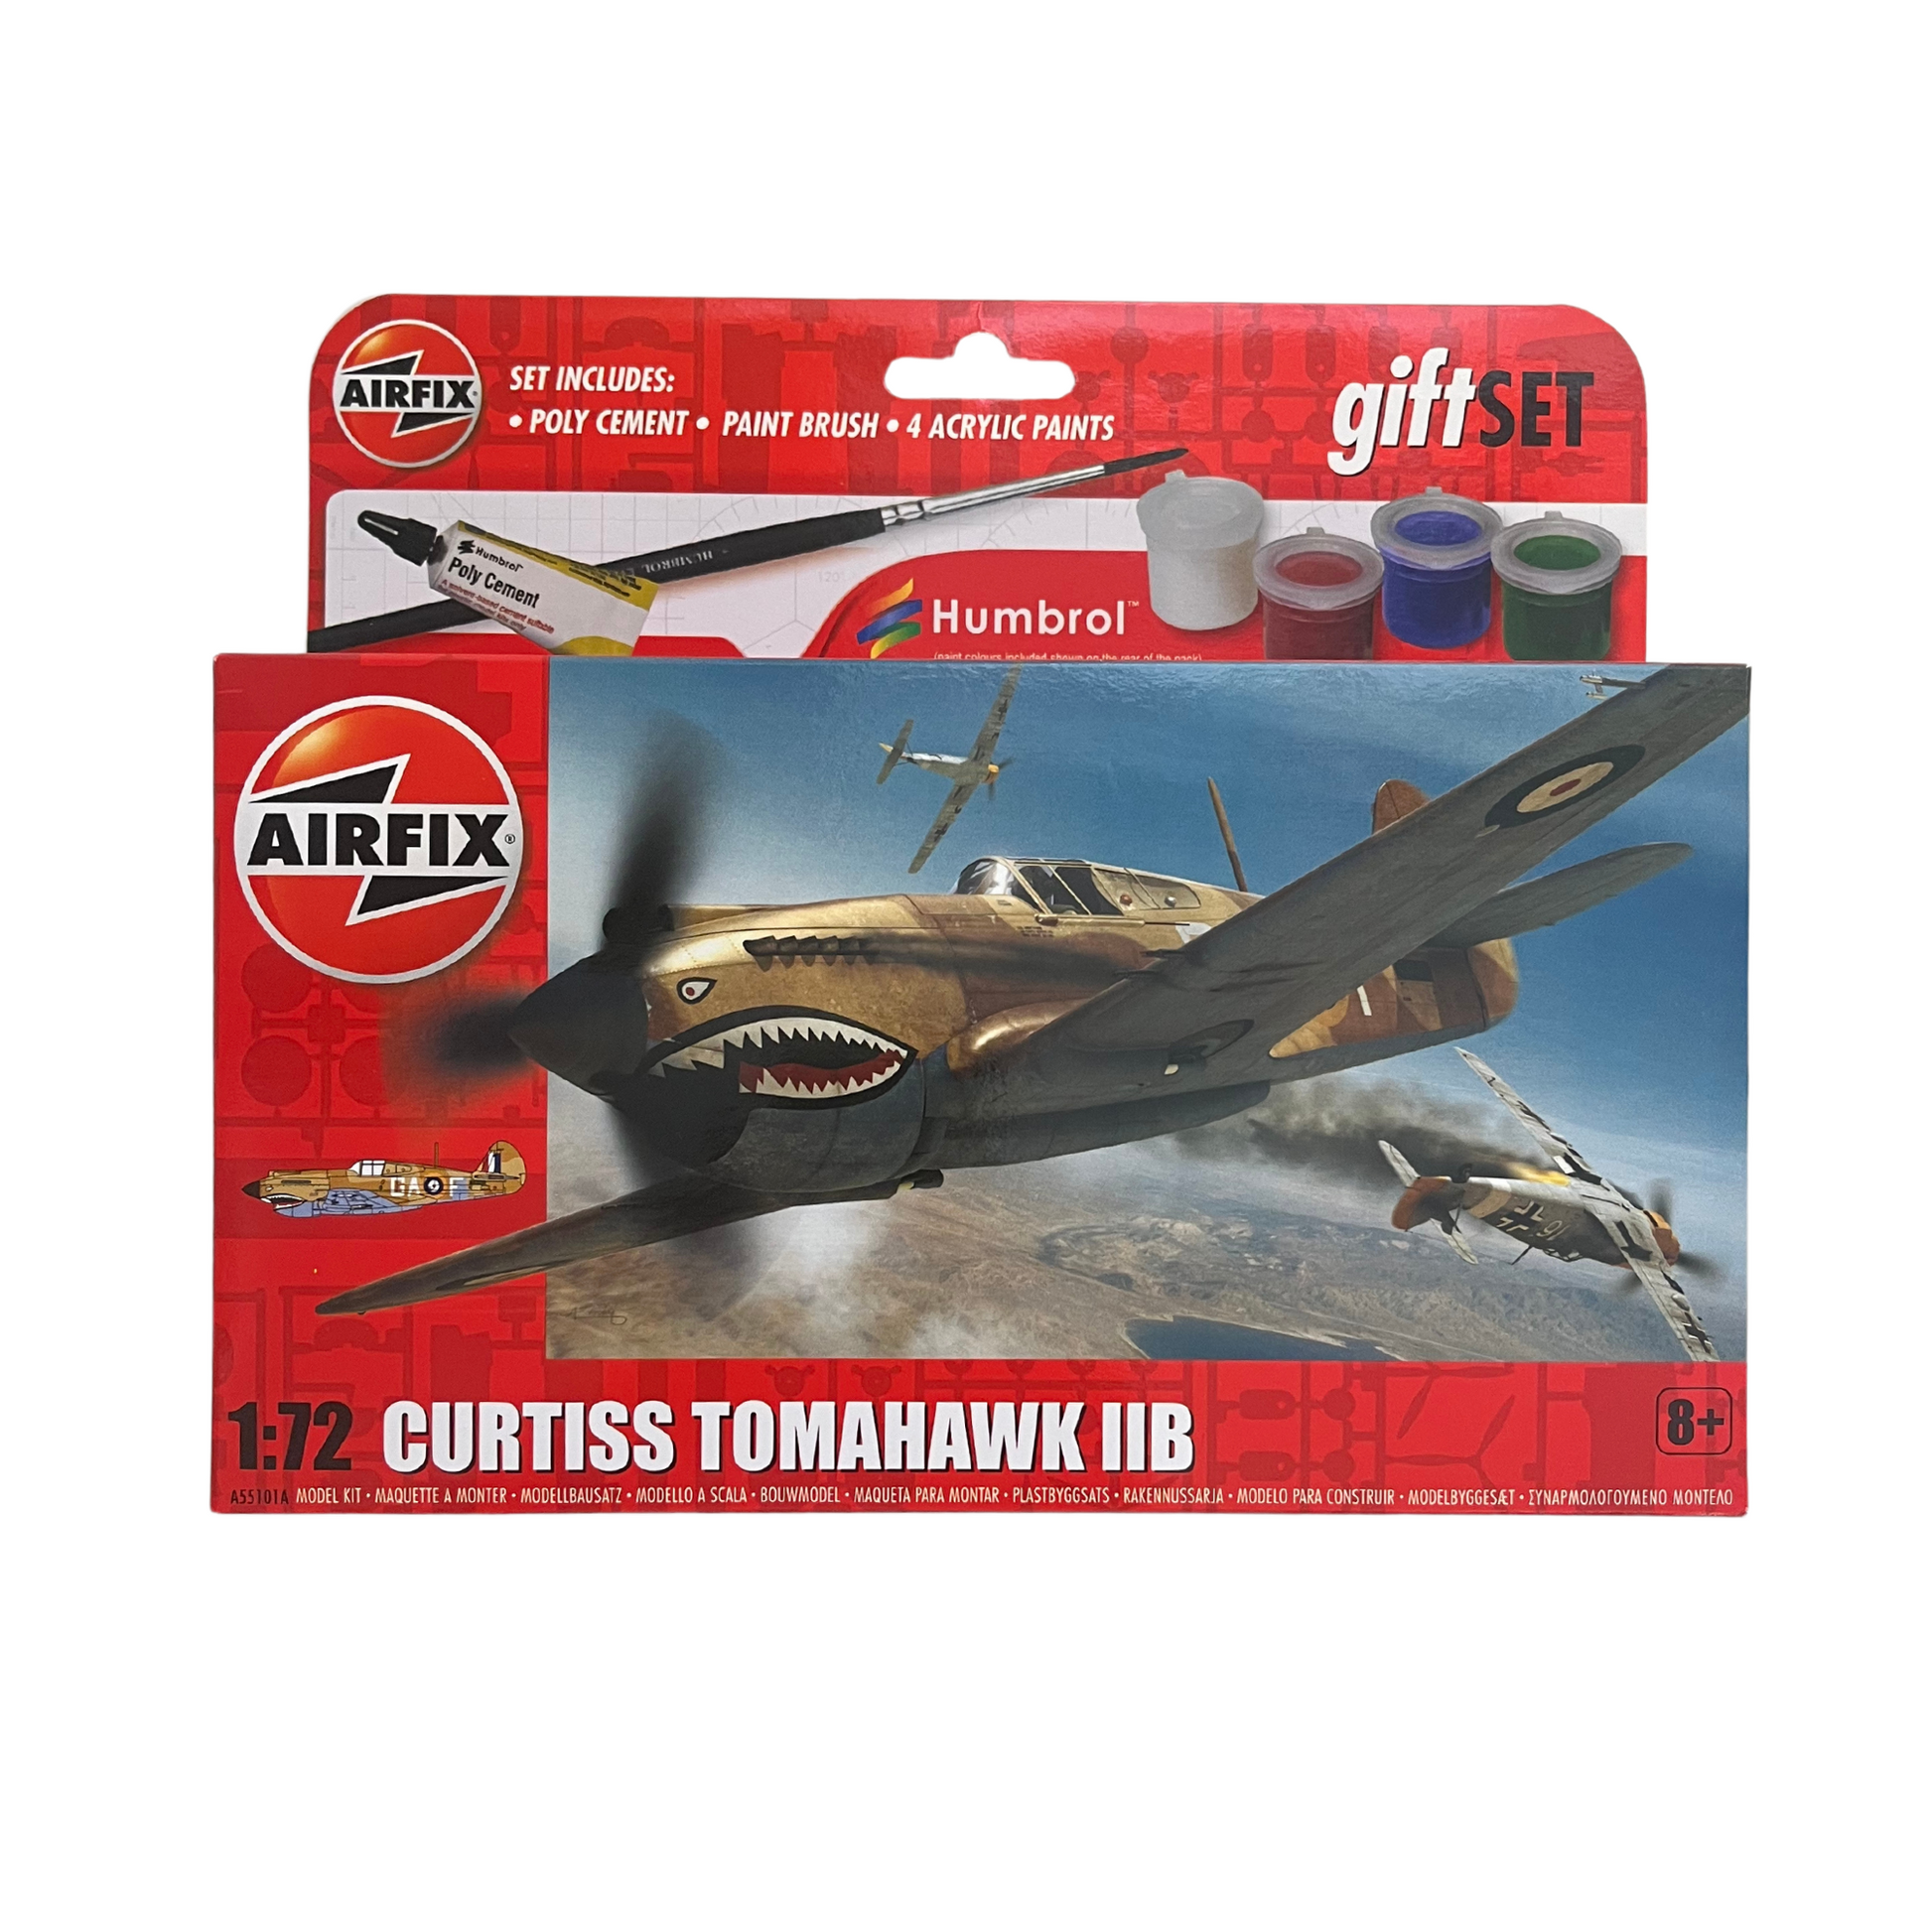 Airfix Gift Set - Curtiss Tomahawk IIB    1/72